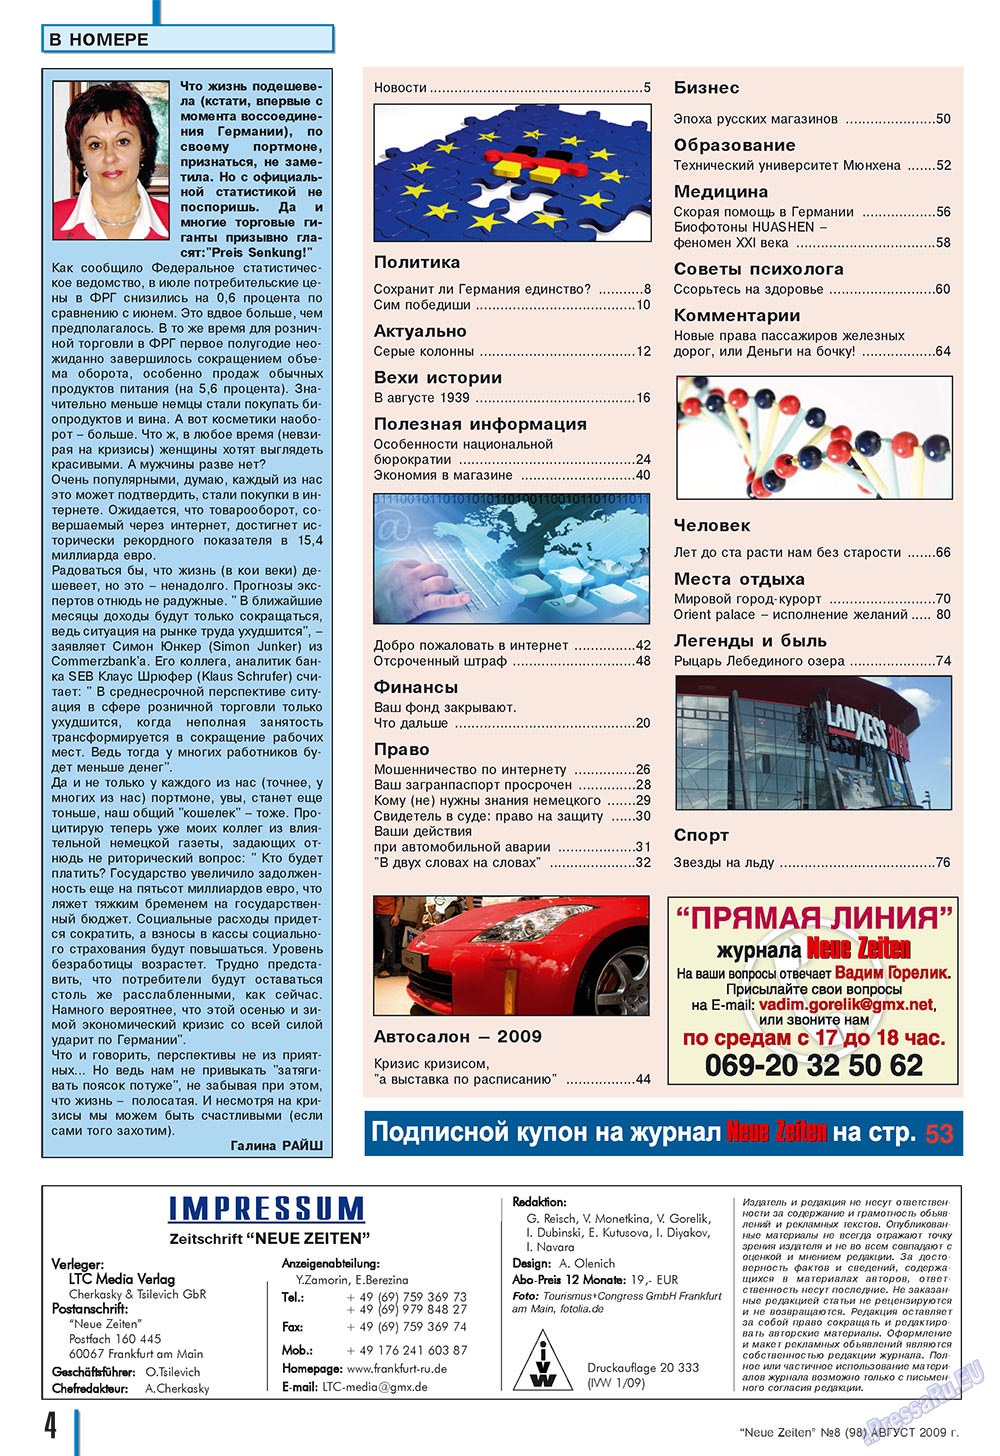 Neue Zeiten (журнал). 2009 год, номер 8, стр. 4